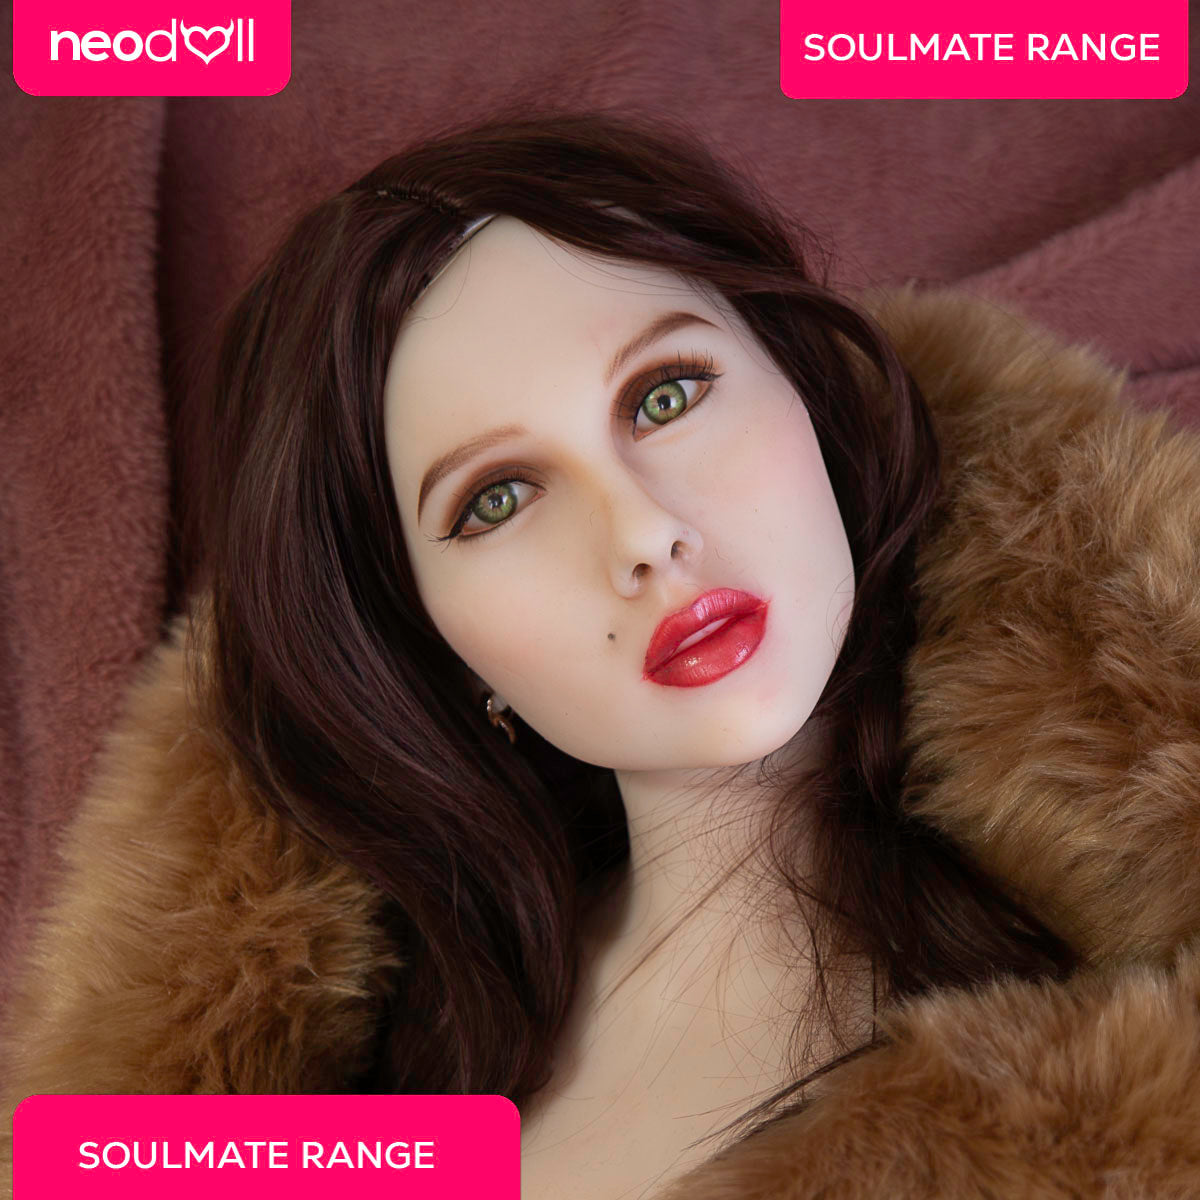 SoulMate Doll - Alexis Head - Sex Doll Torso - White